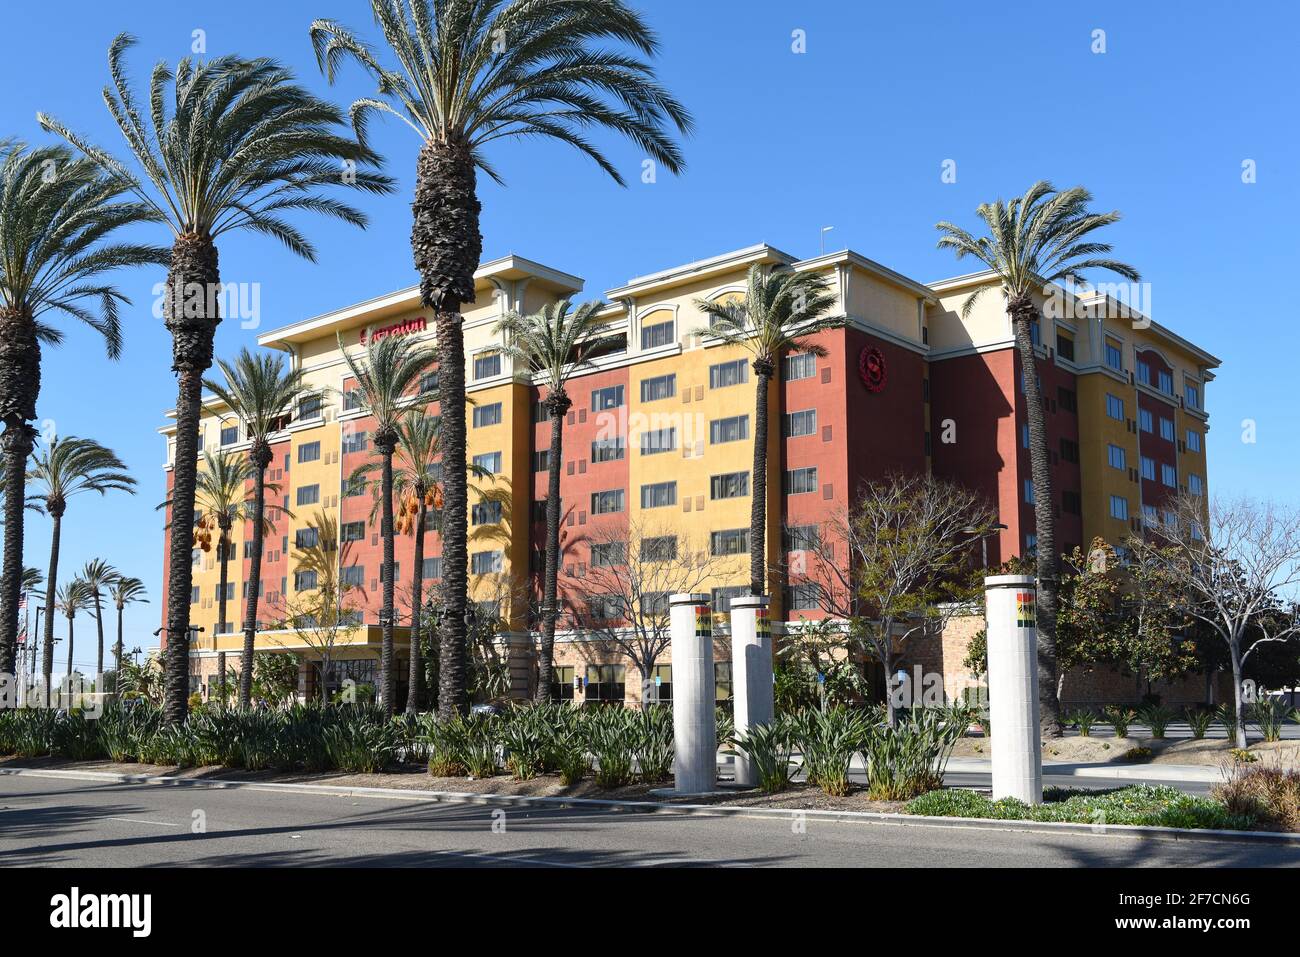 GARDEN GROVE, CALIFORNIA - 31 MAR 2021: Sheraton Hotel on Harbor Boulevard int he Anaheim Resort Area. Stock Photo